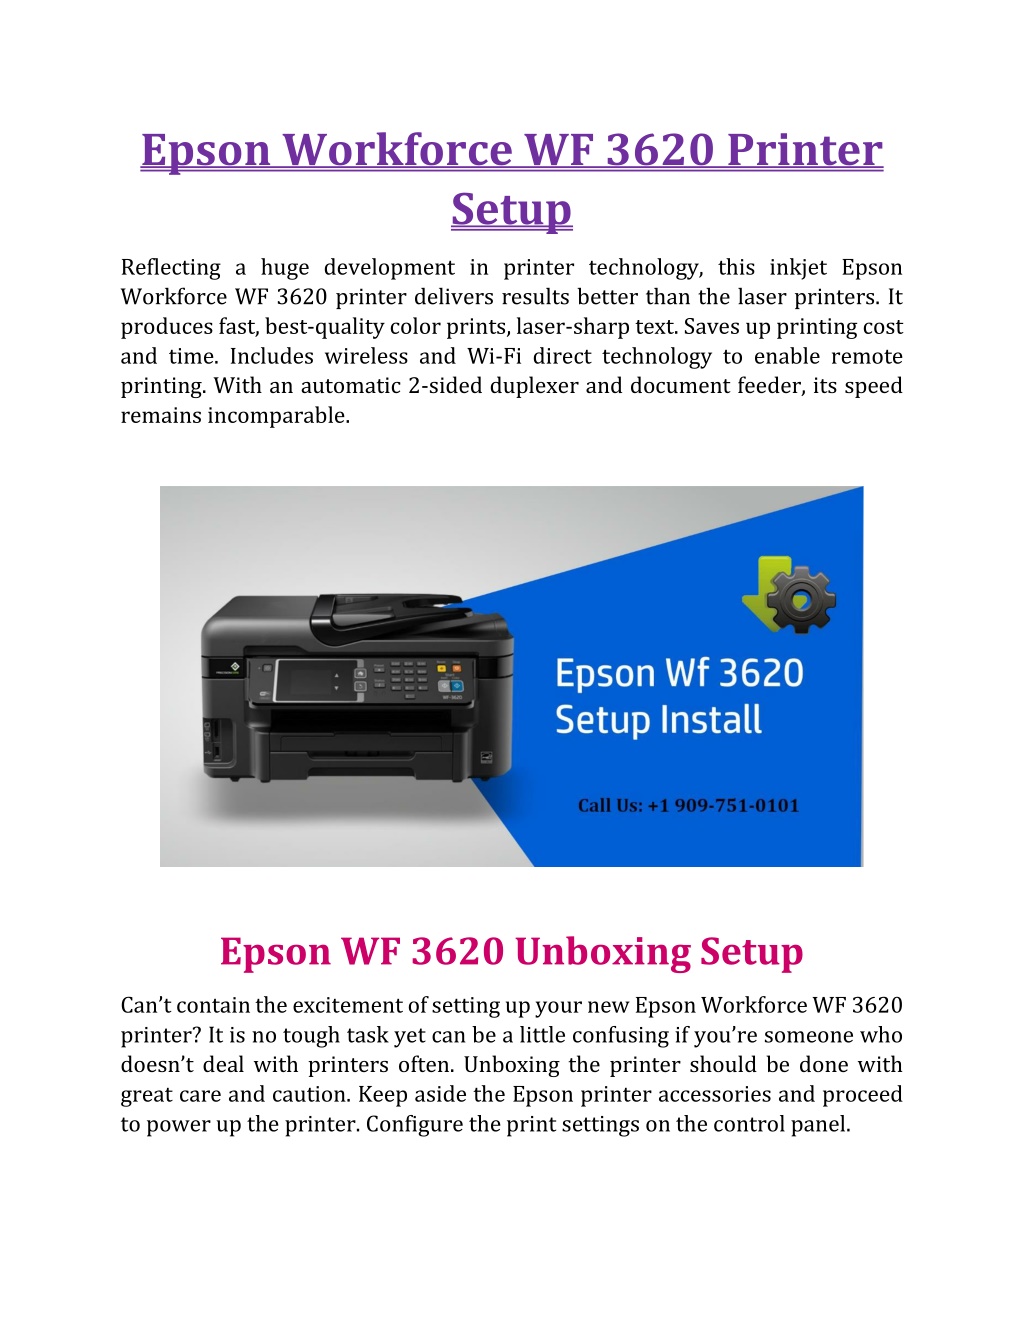 Ppt Epson Workforce Wf 3620 Printer Setup Powerpoint Presentation Free Download Id11632037 2248